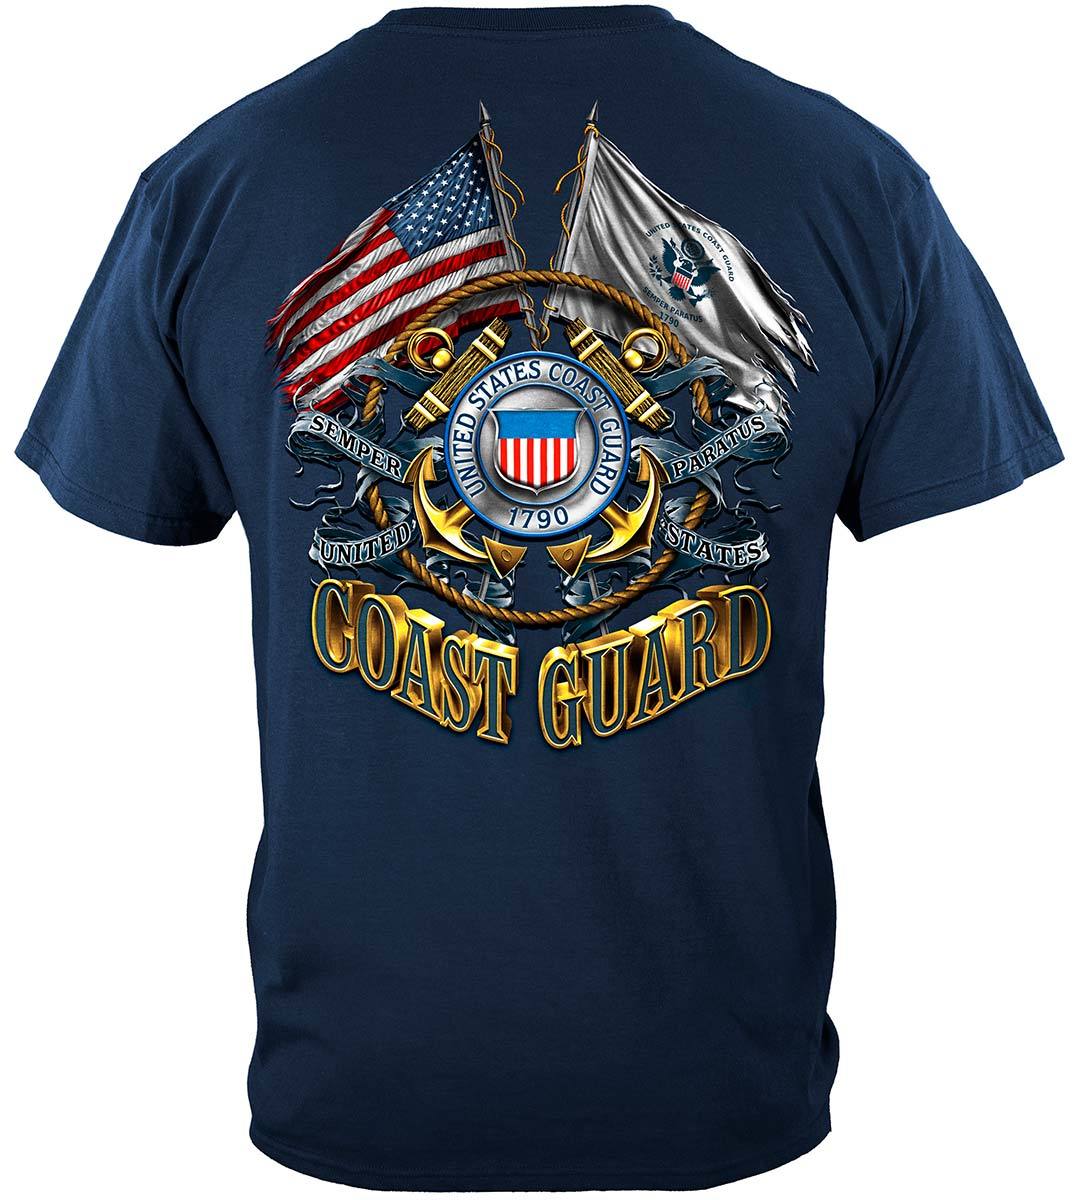 Double Flag Coast Guard Premium Hooded Sweat Shirt